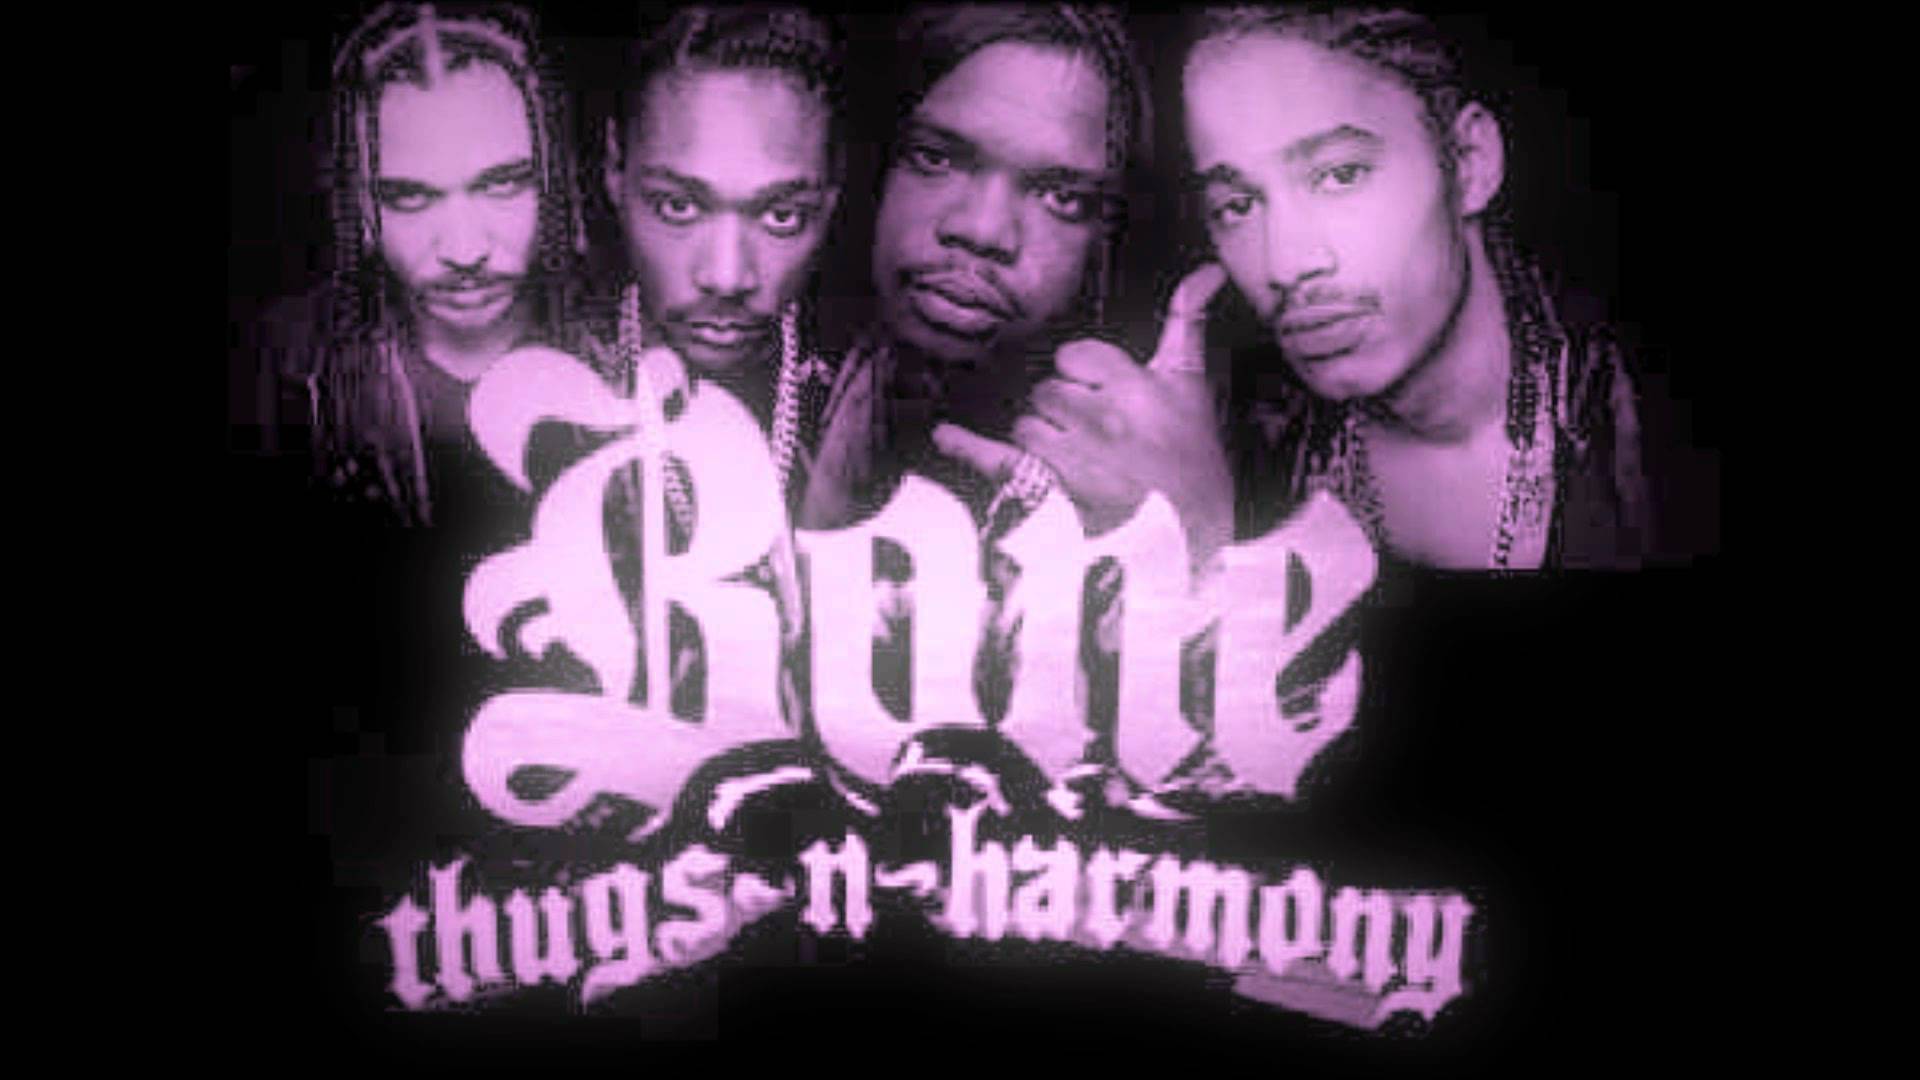 Bone thugs n harmony ecstasy